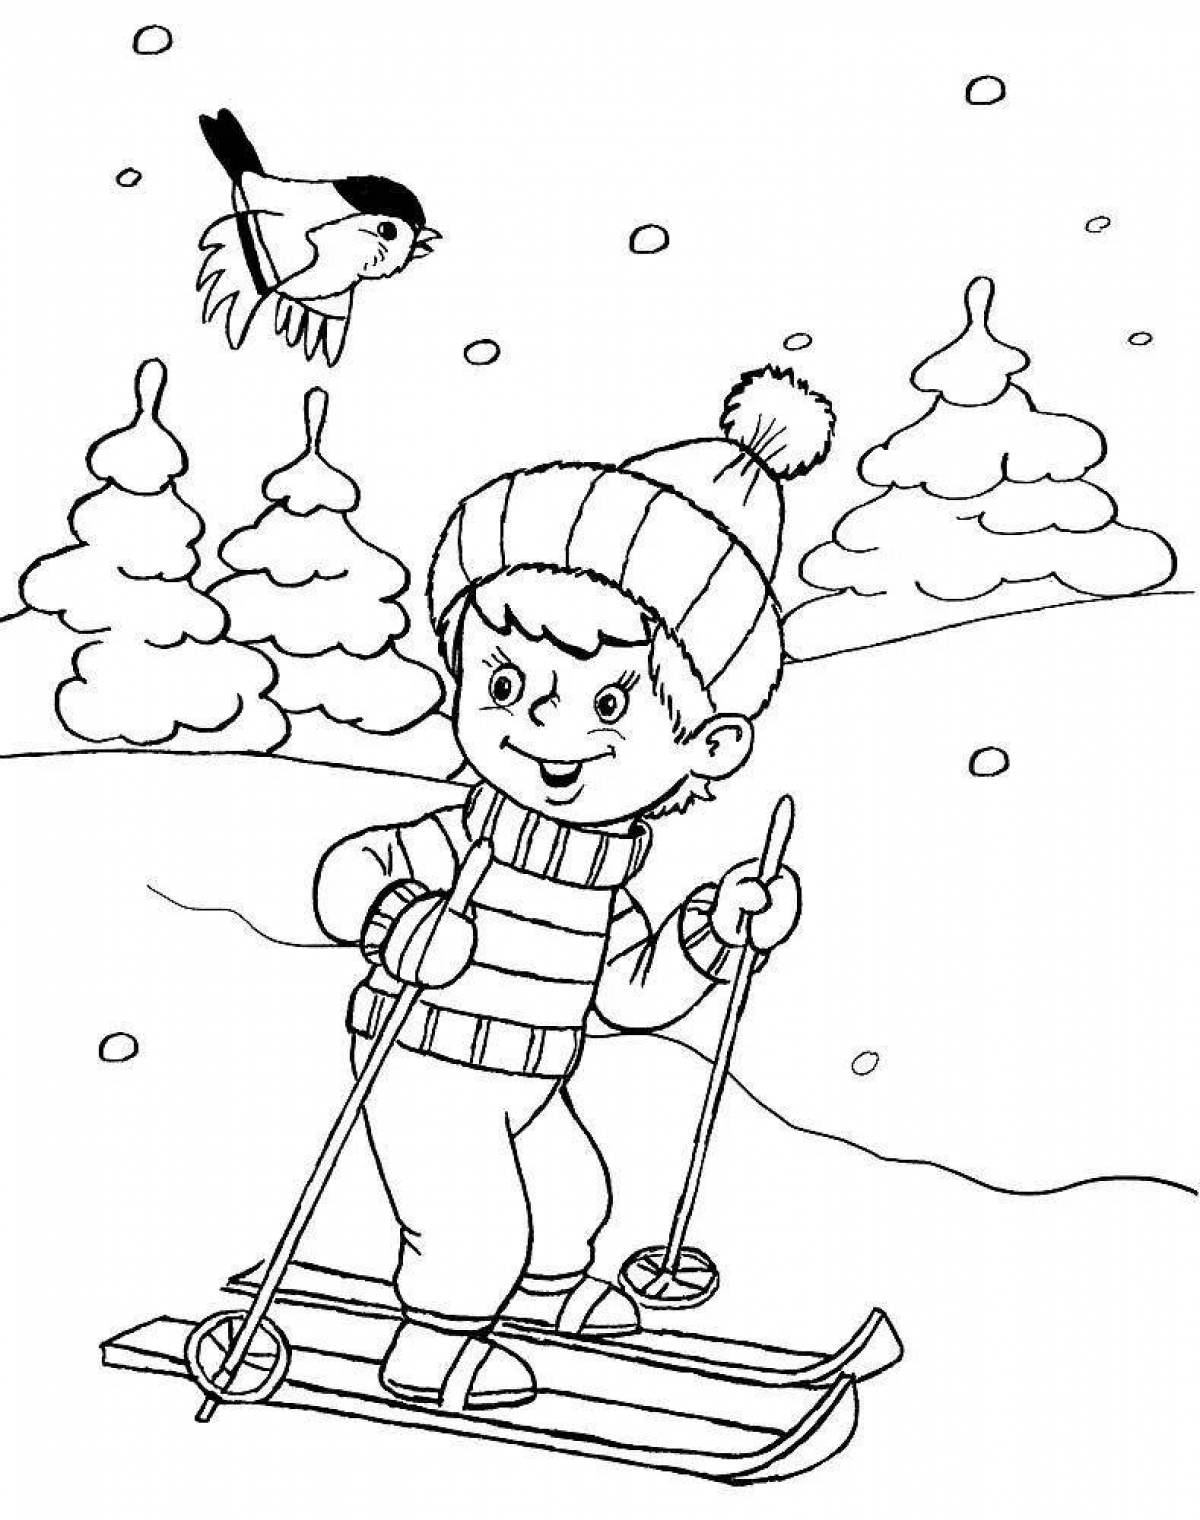 Coloring page jubilant winter fun